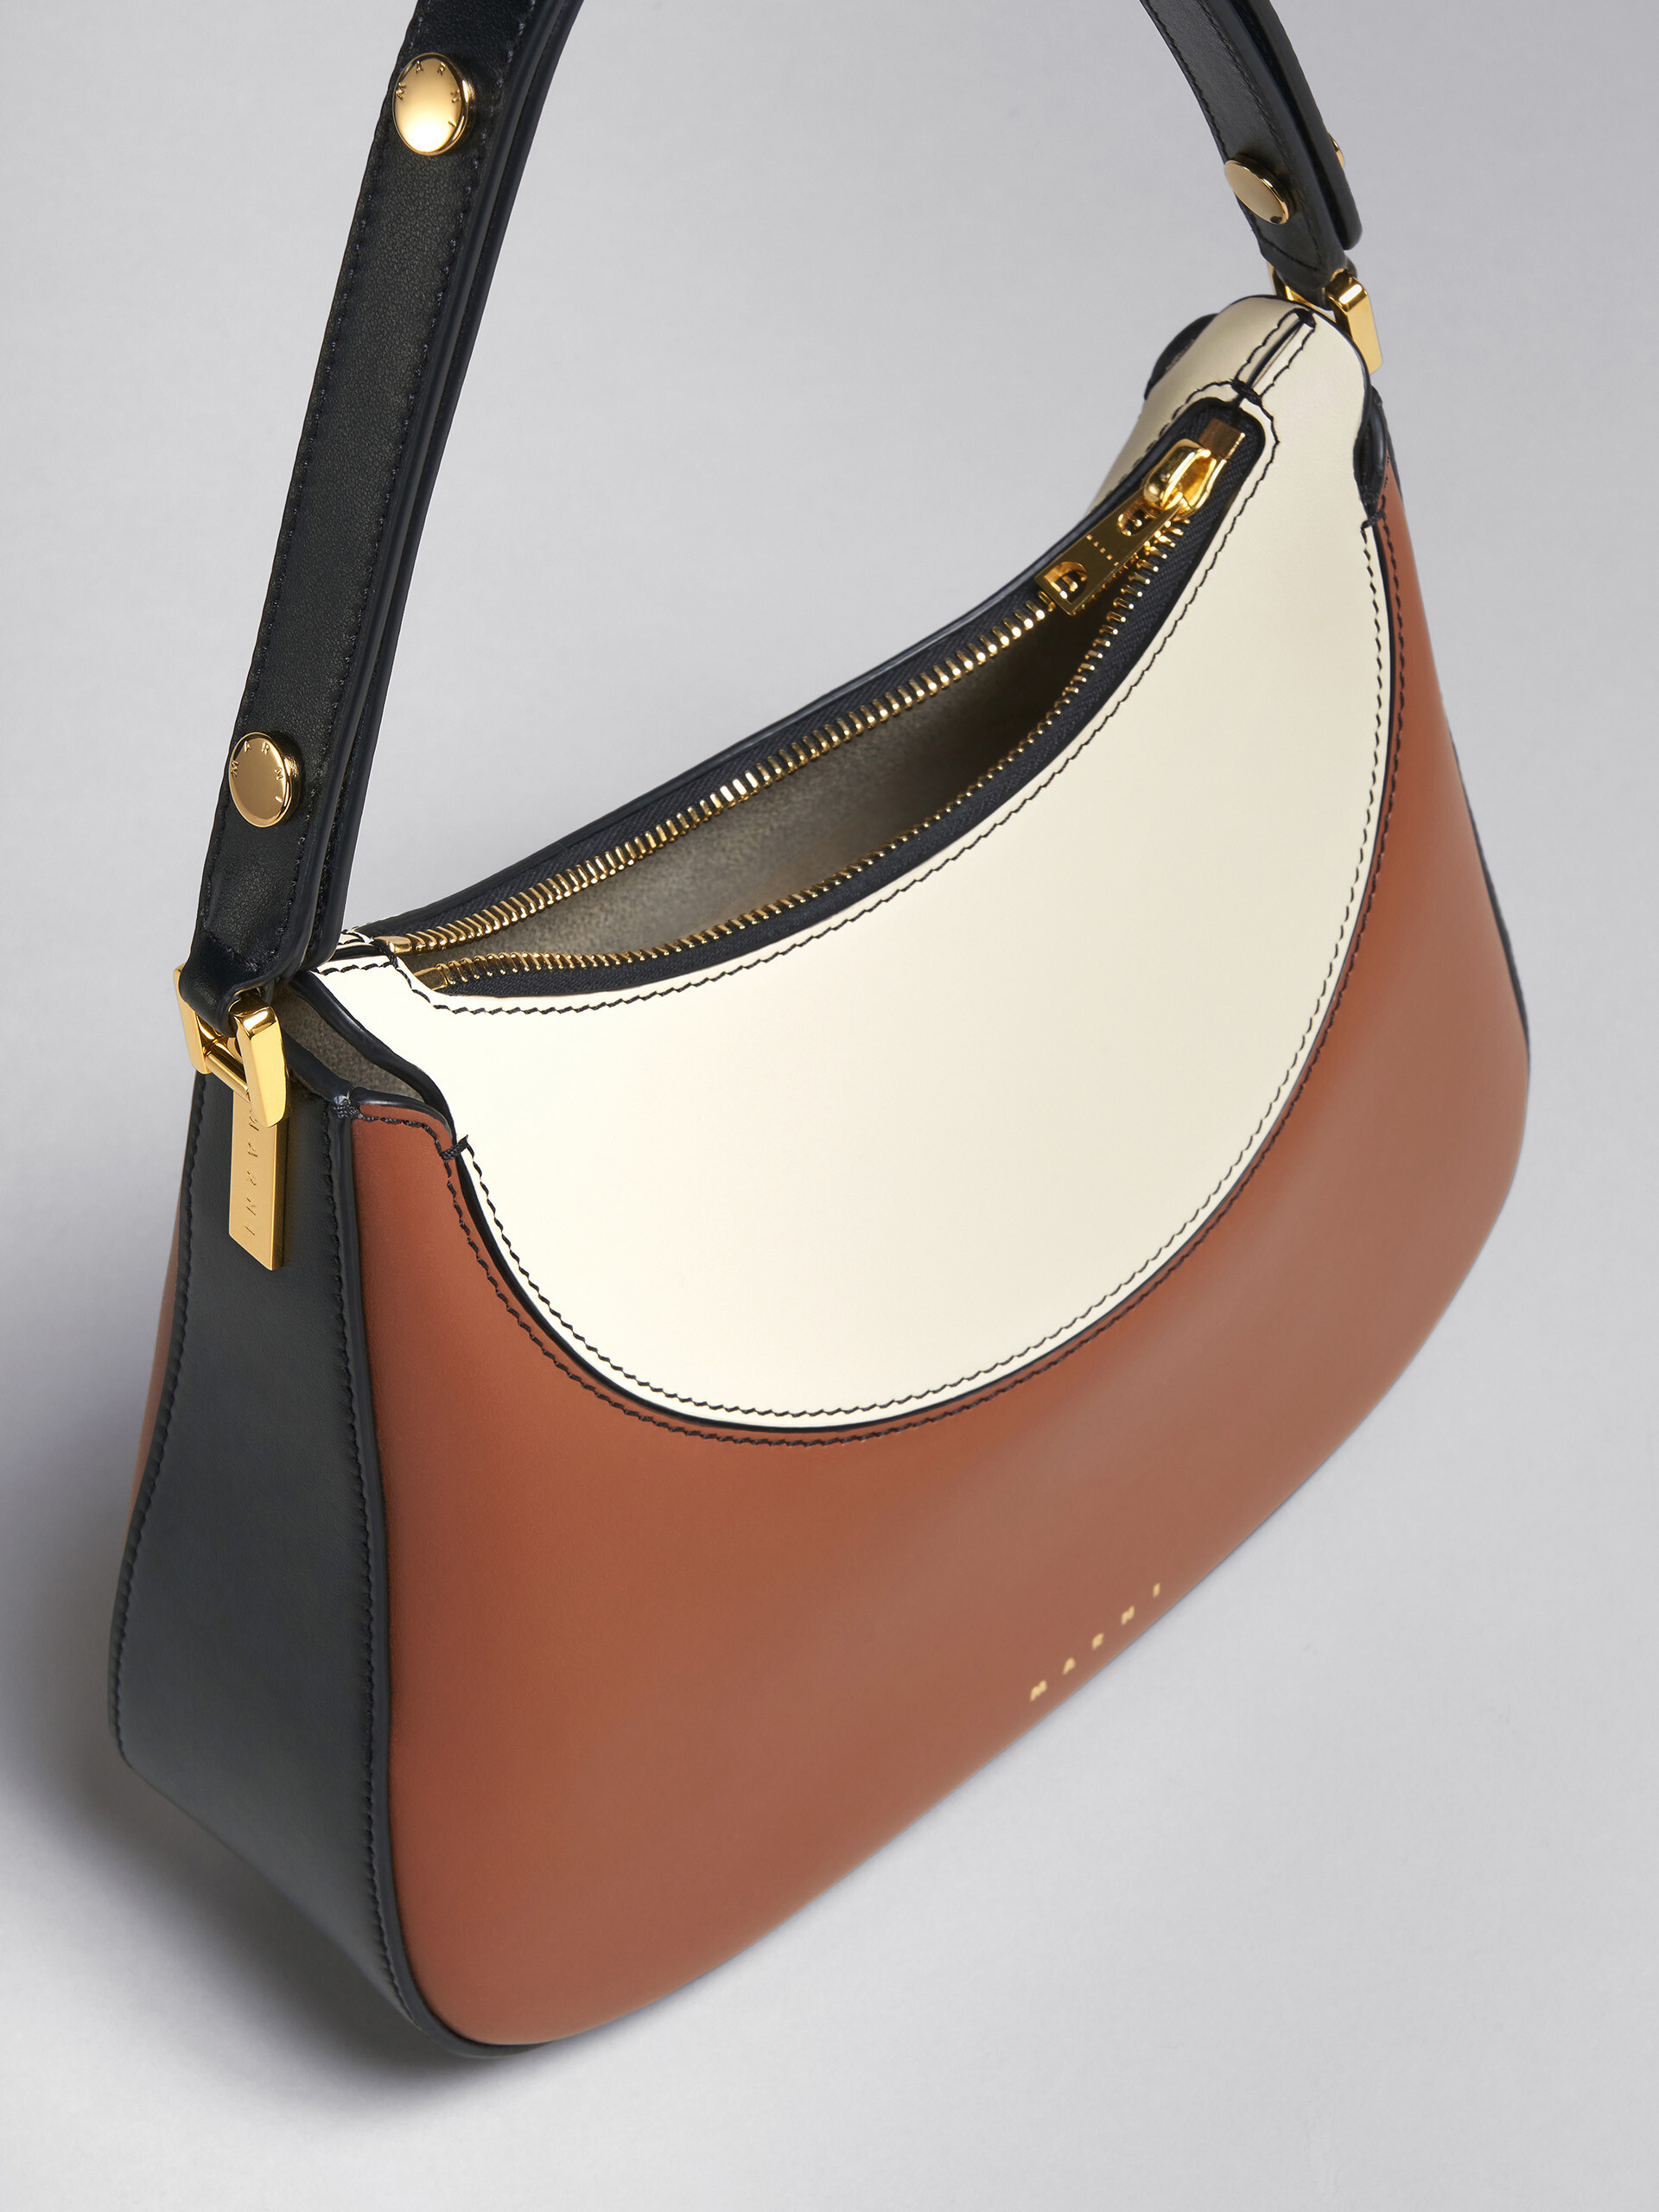 Milano small bag in brown black and white - Handbag - Image 4